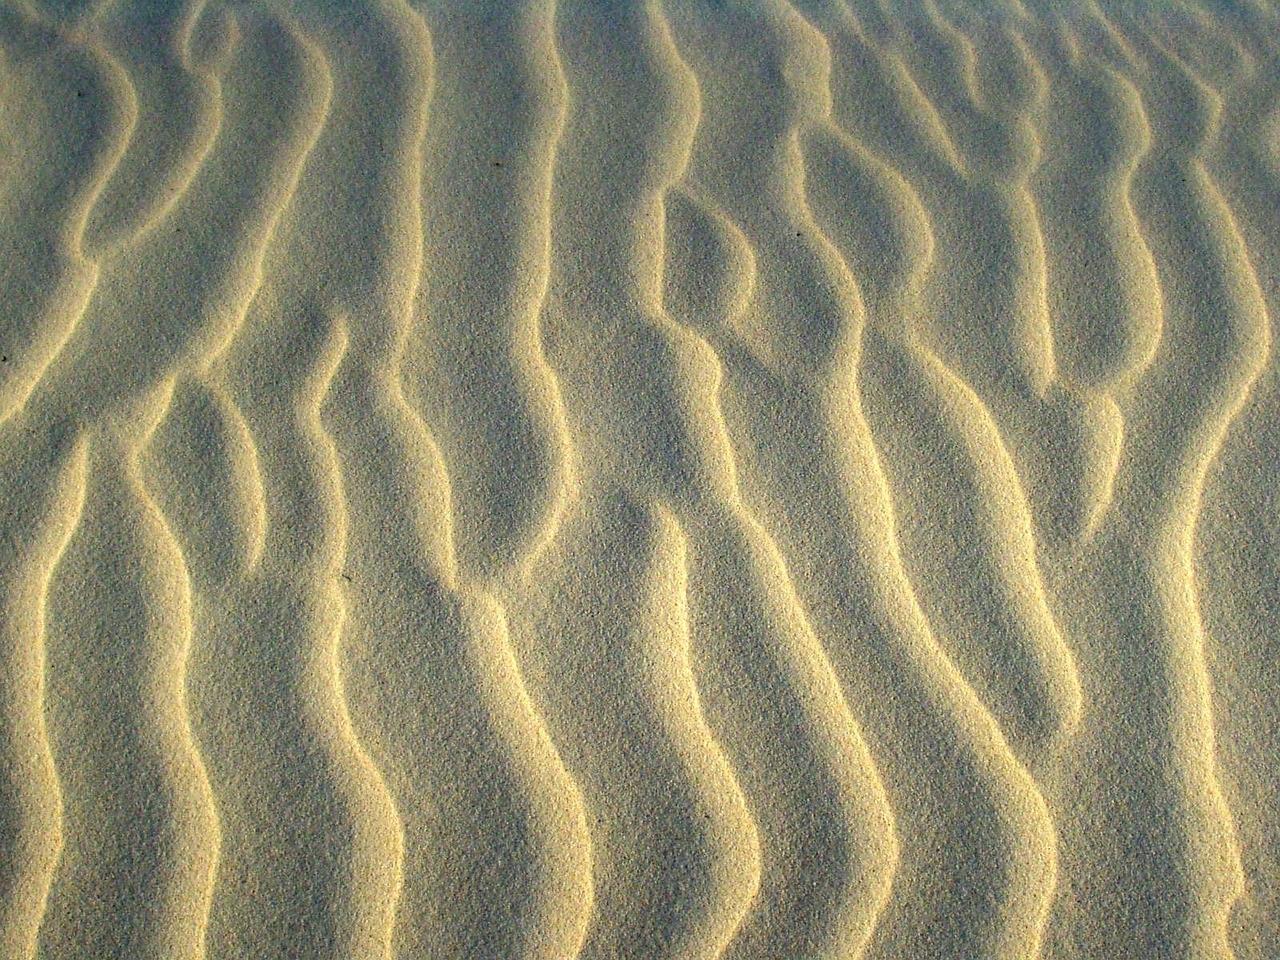 sand ripples texture free photo